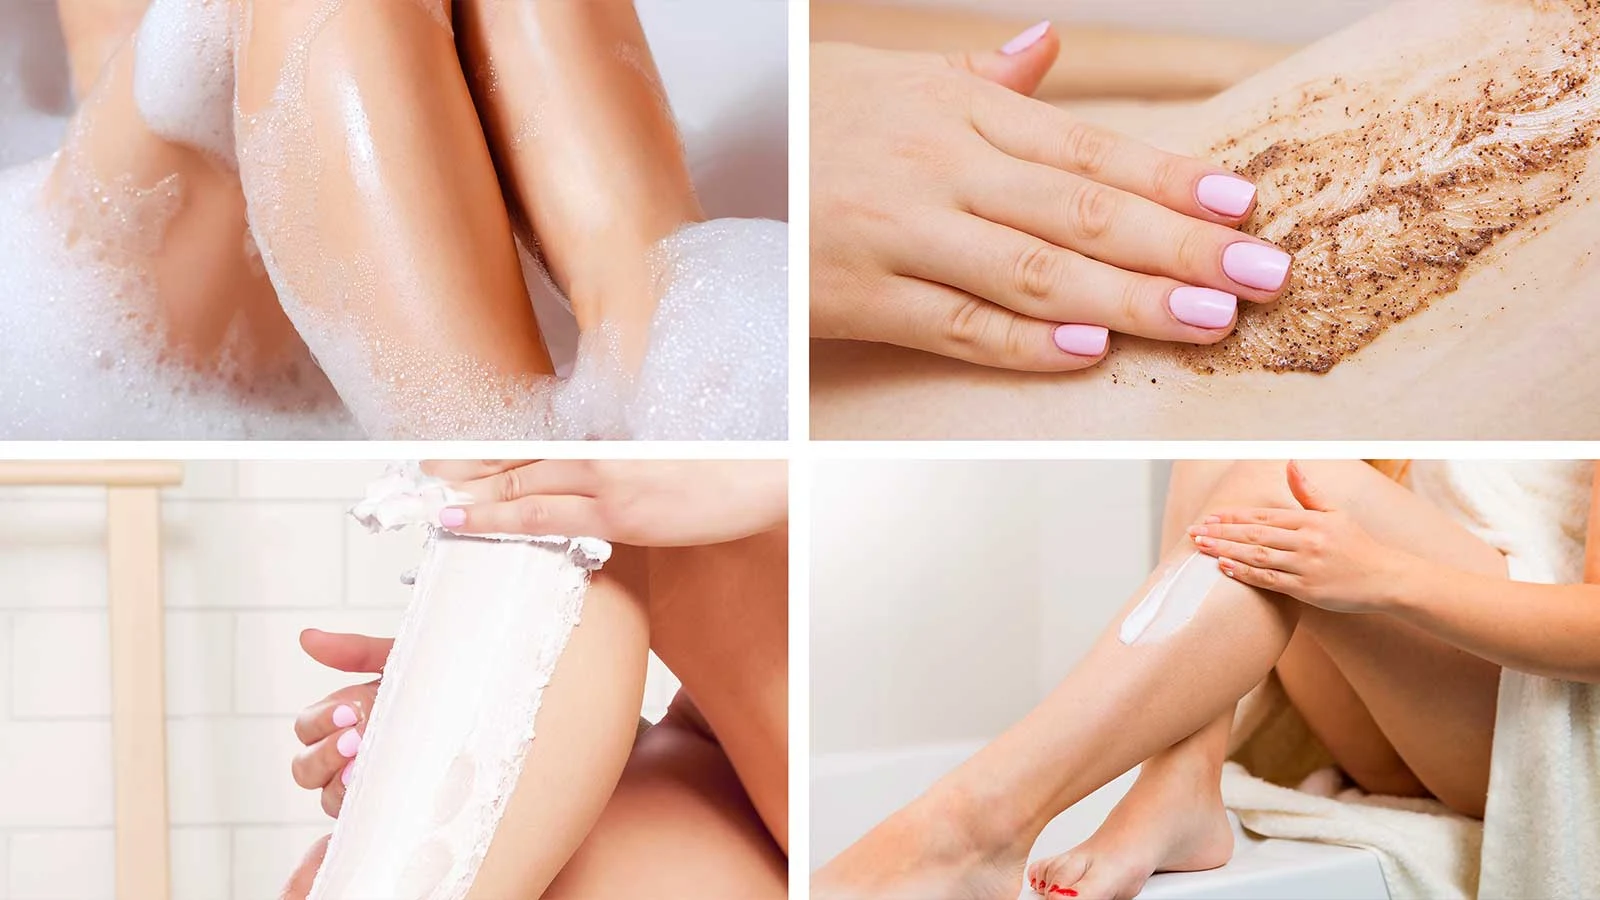 El proceso de afeitado de 4 pasos incluye baño, aplicación de gel de afeitar, afeitado e hidratación.